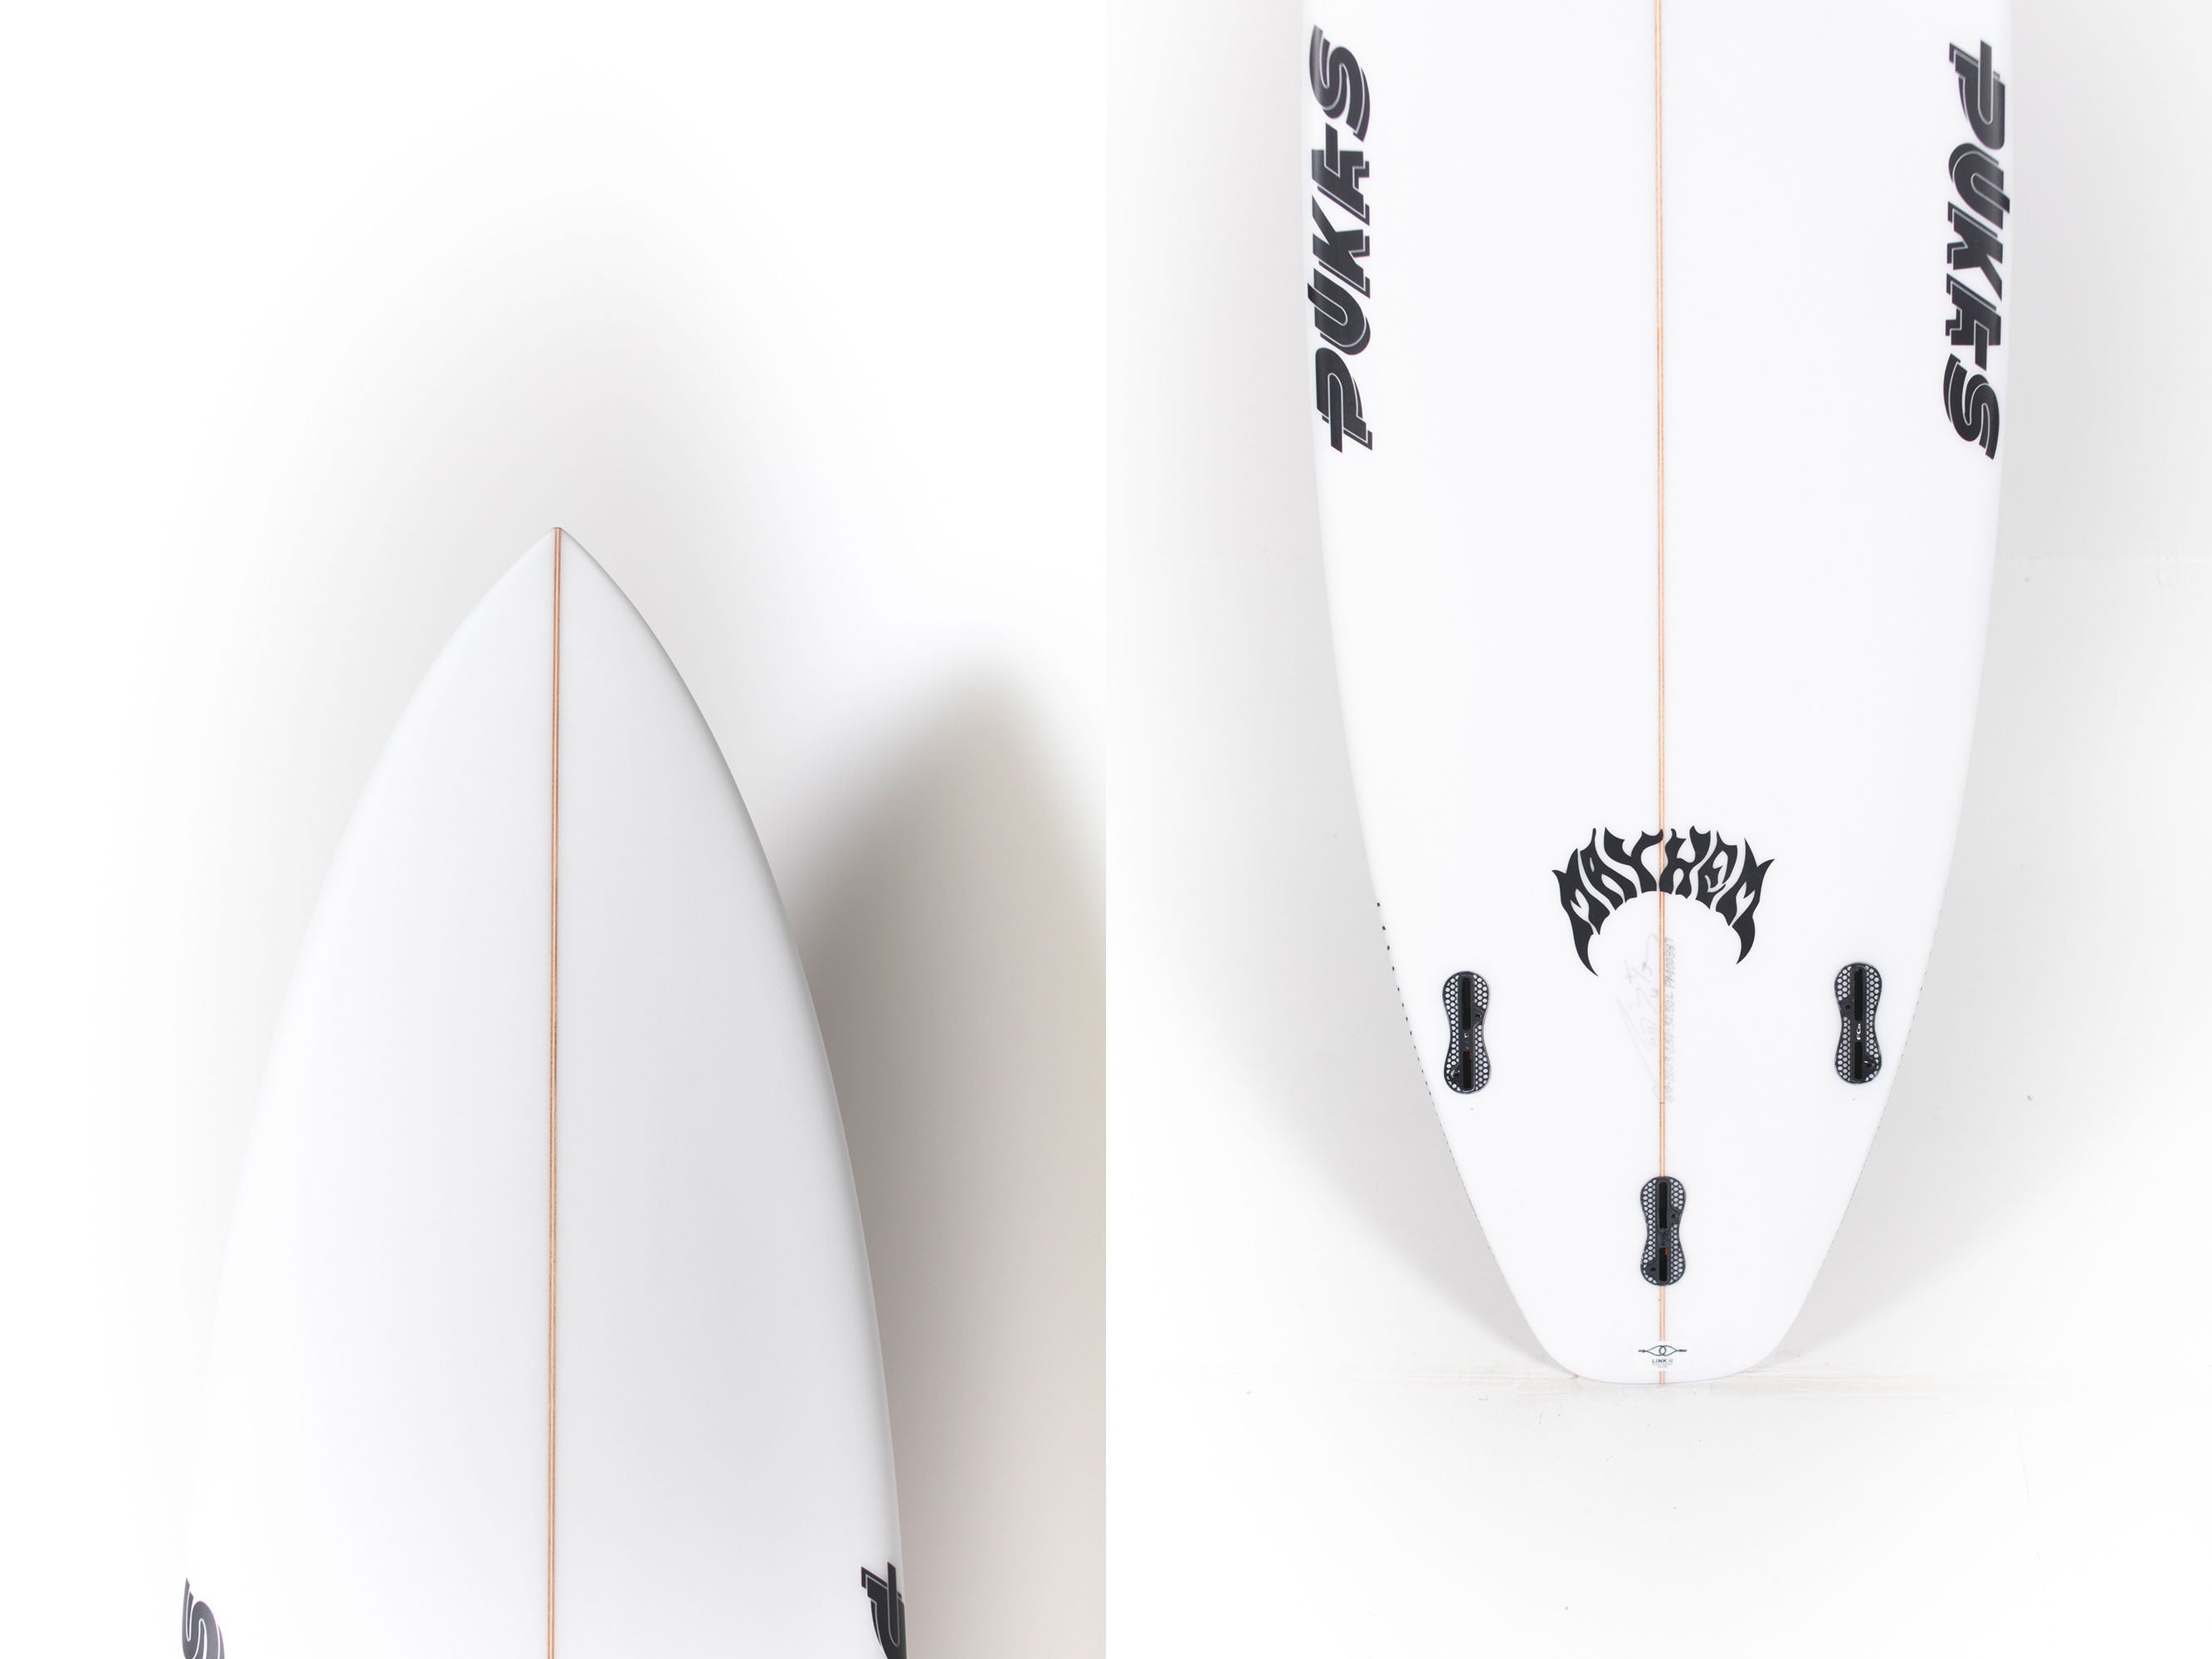 Pukas Surfboard - THE LINK 2  by Matt Biolos - 6’0” x 20.13 x 2,5 - 32,5L - PM00887